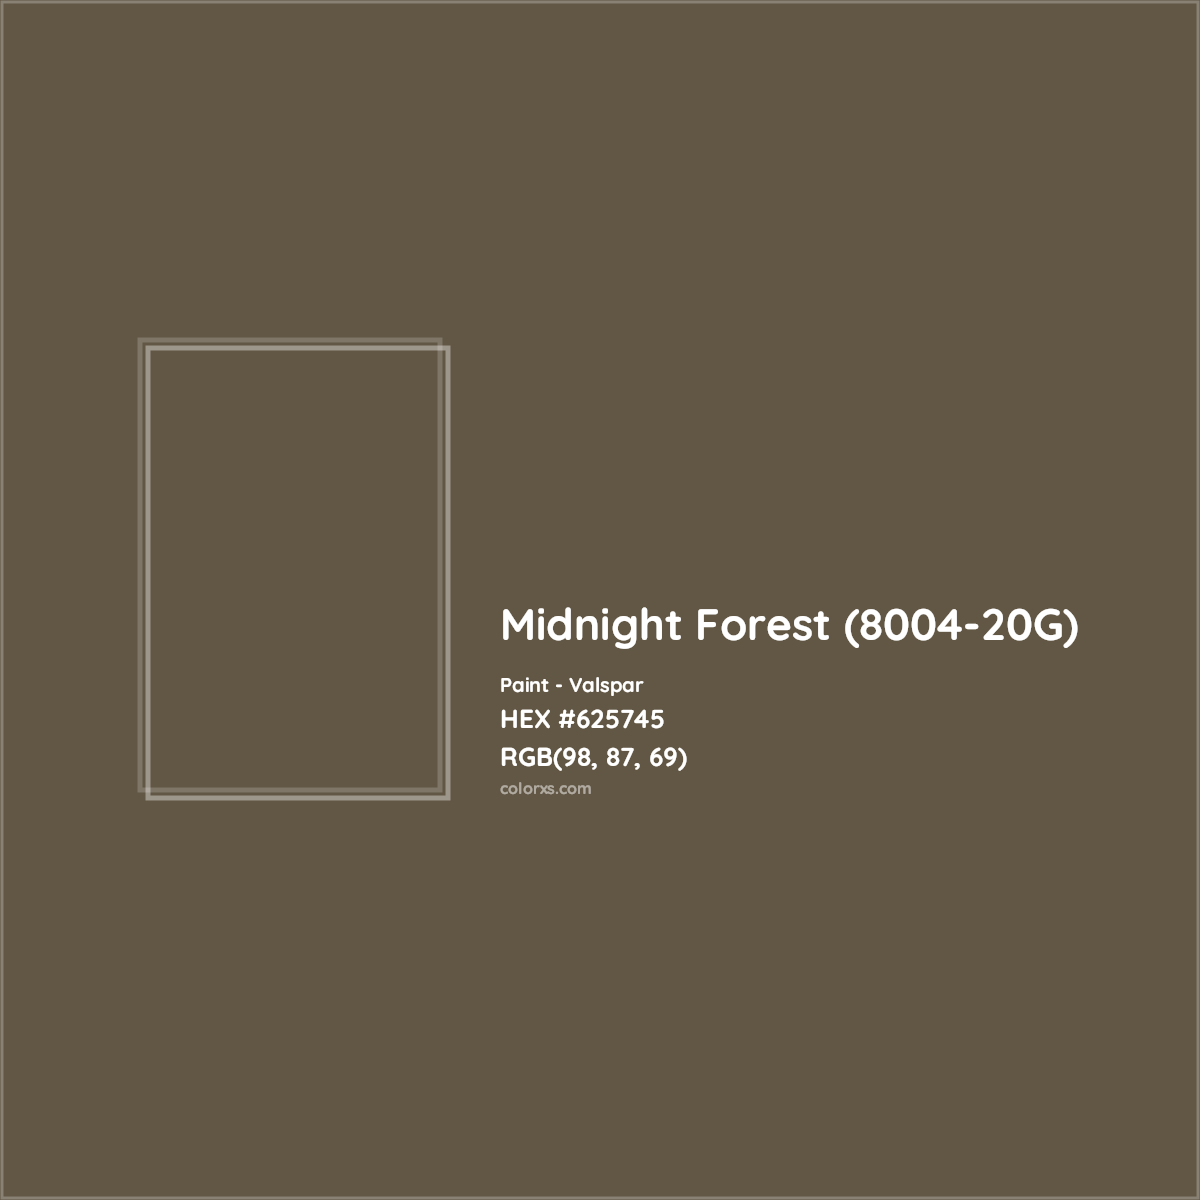 HEX #625745 Midnight Forest (8004-20G) Paint Valspar - Color Code